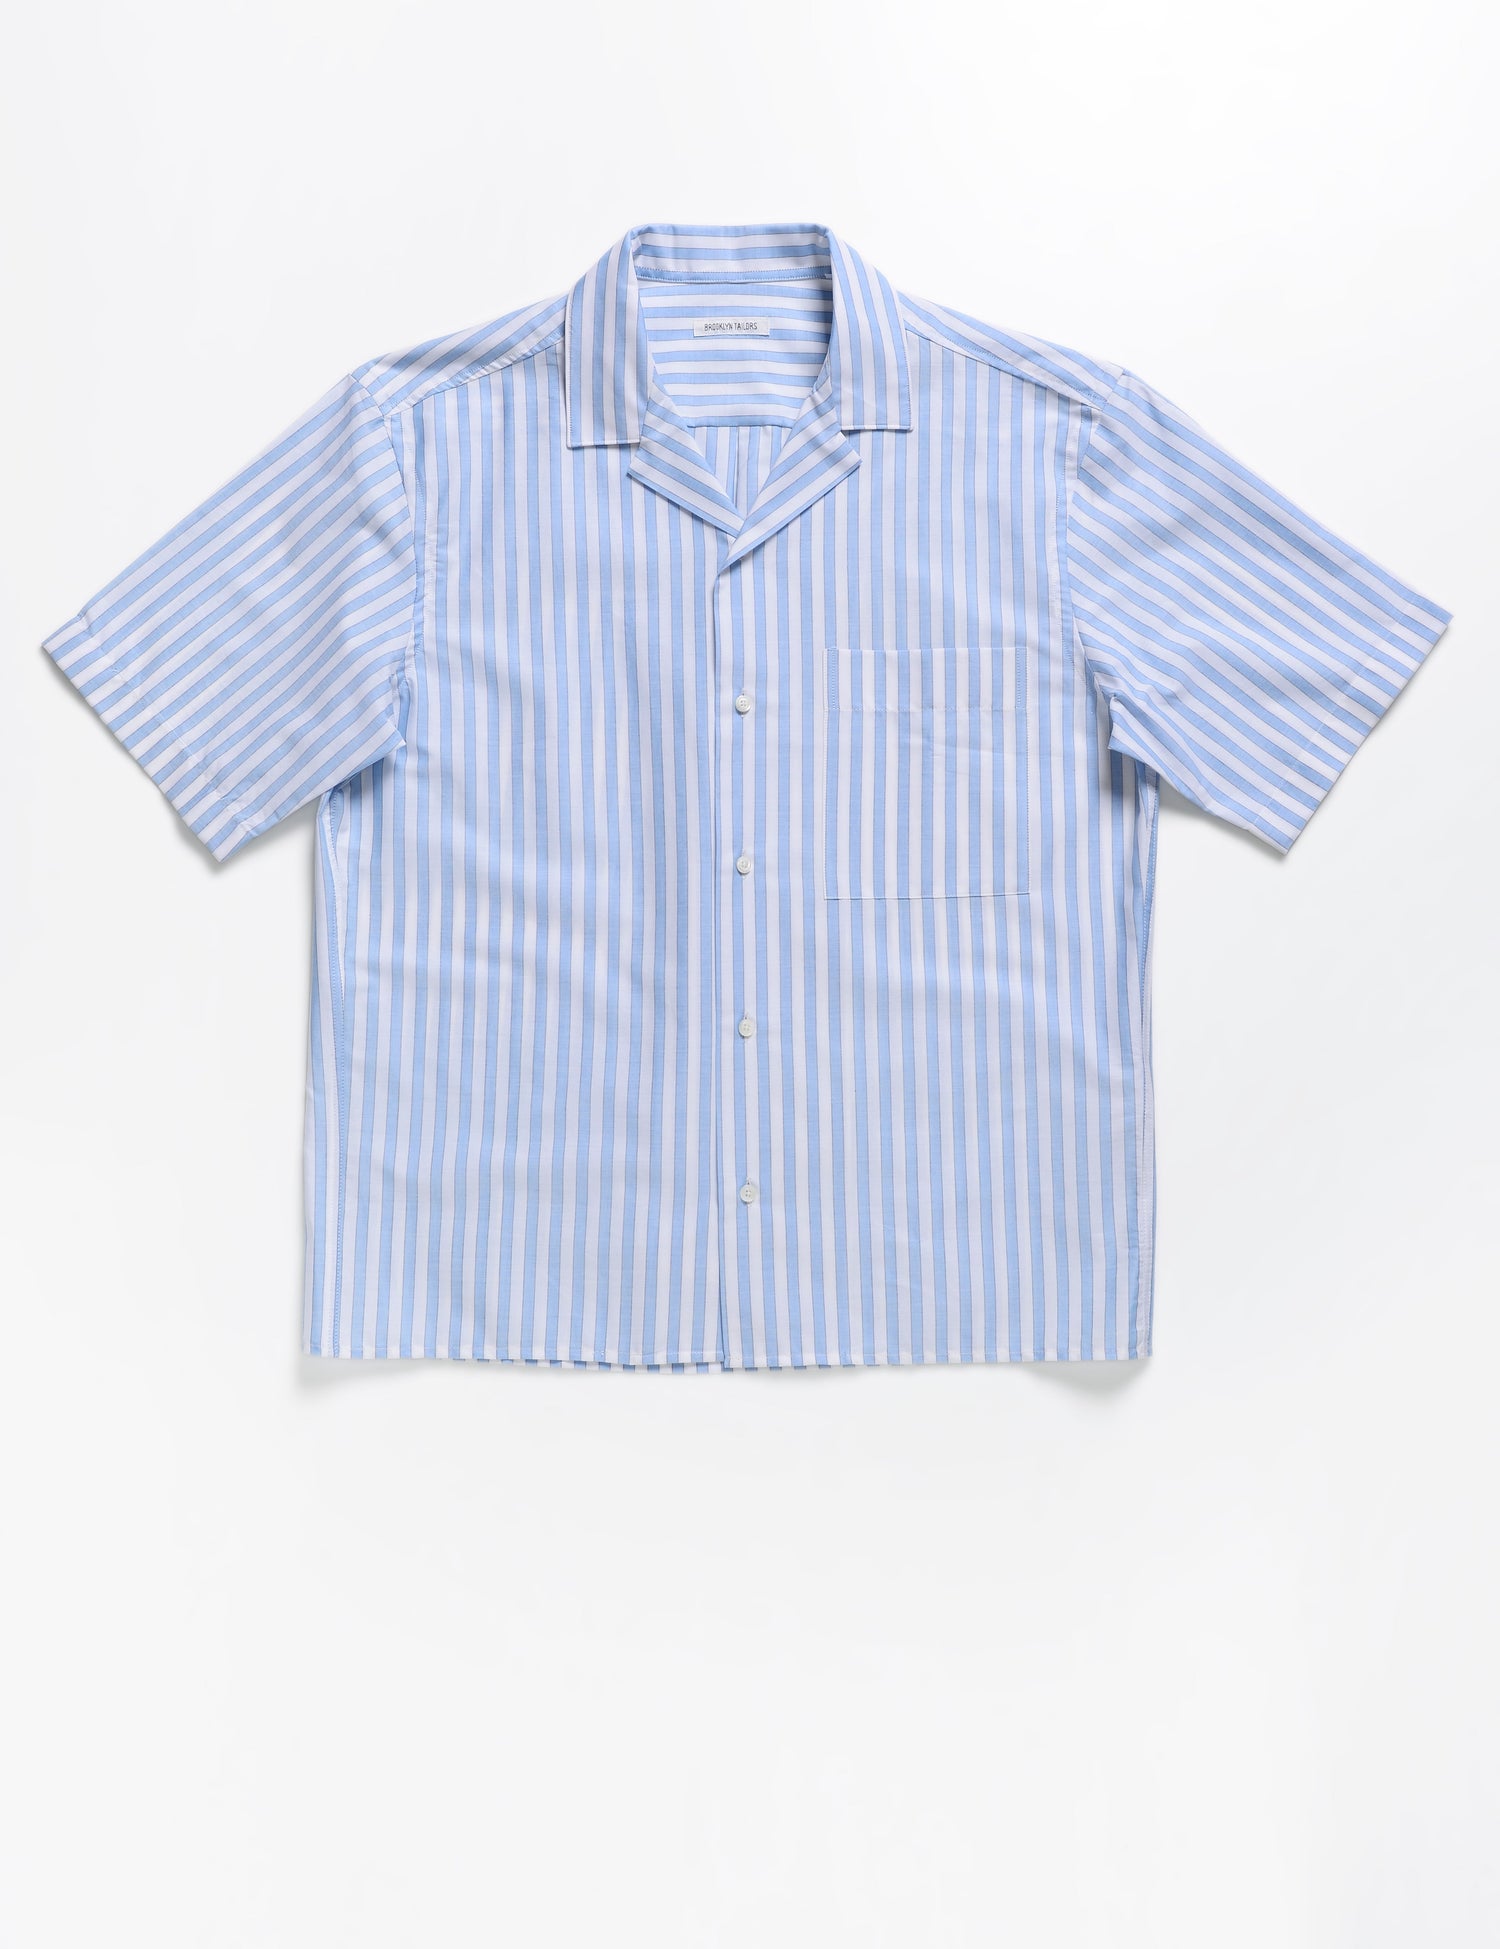 Full length flat shot of Brooklyn Tailors BKT18 Camp Shirt in Bar Stripe - Air Blue